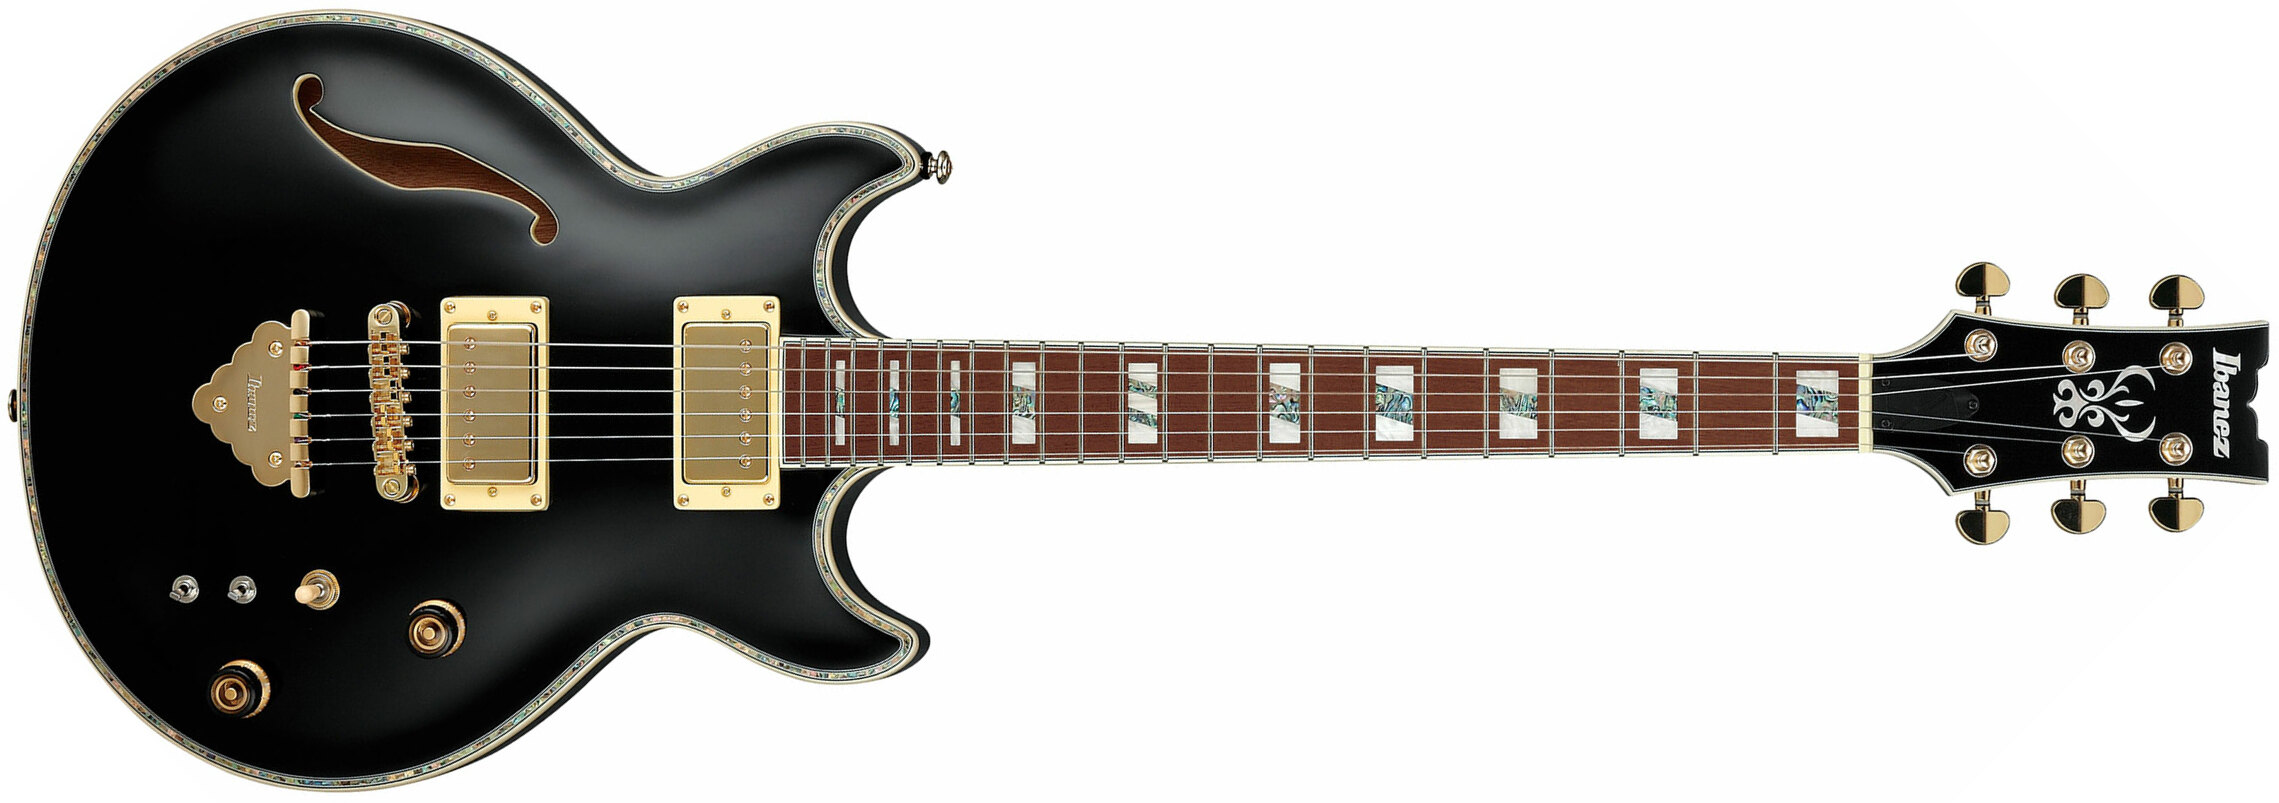 Ibanez Ar520h Bk Standard Hh Ht Jat - Black - Guitarra elécrica Jazz cuerpo acústico - Main picture